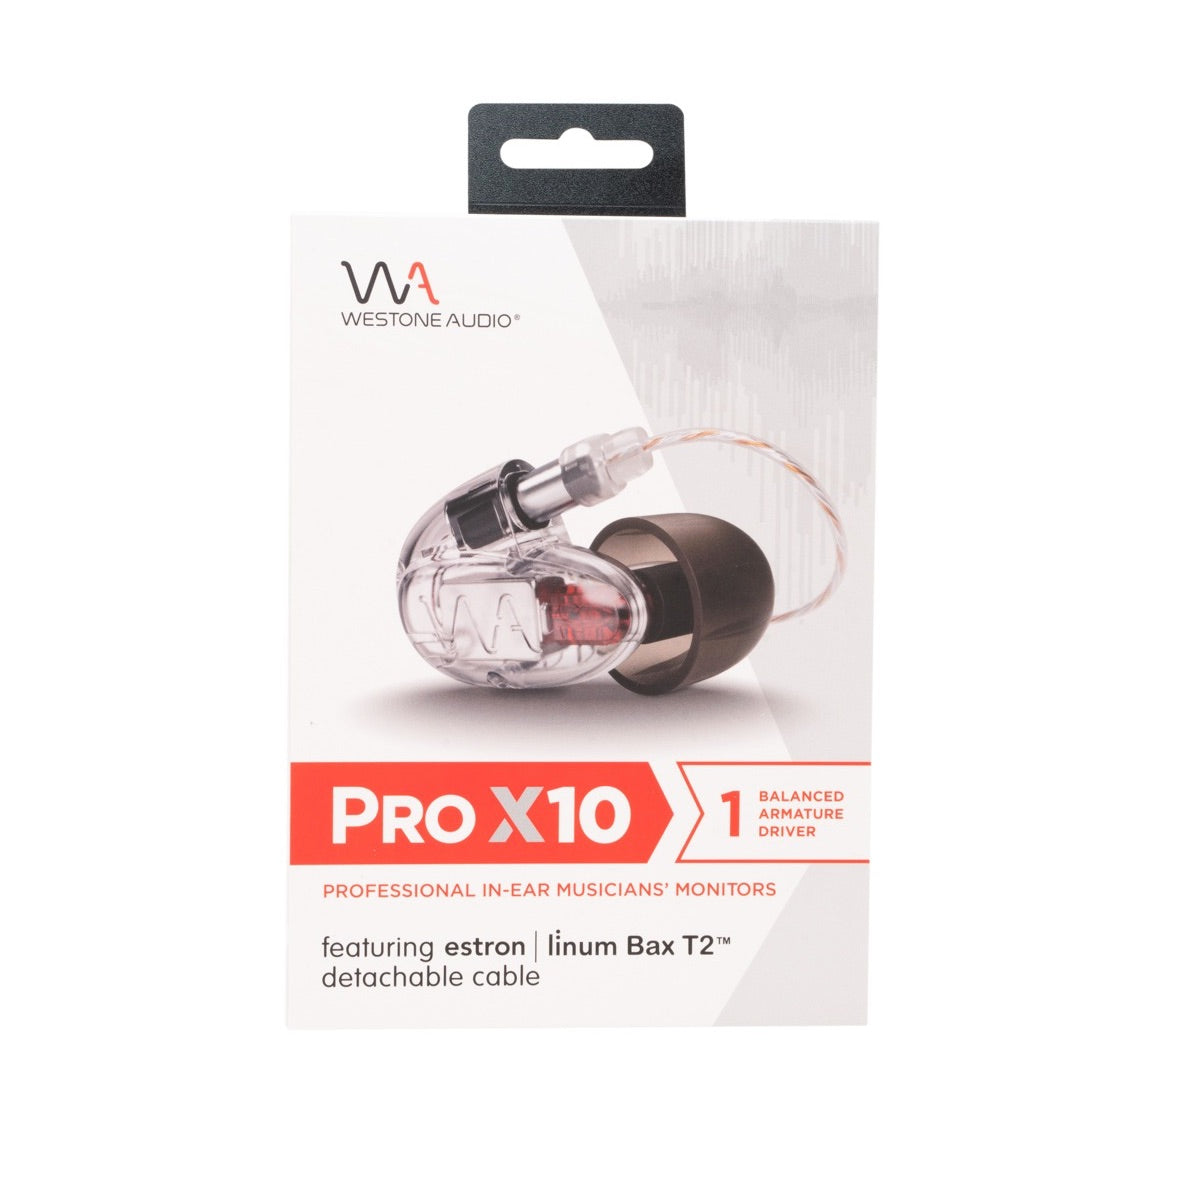 Westone Pro X10 Earphones - Single Driver Musician IEM, retail box